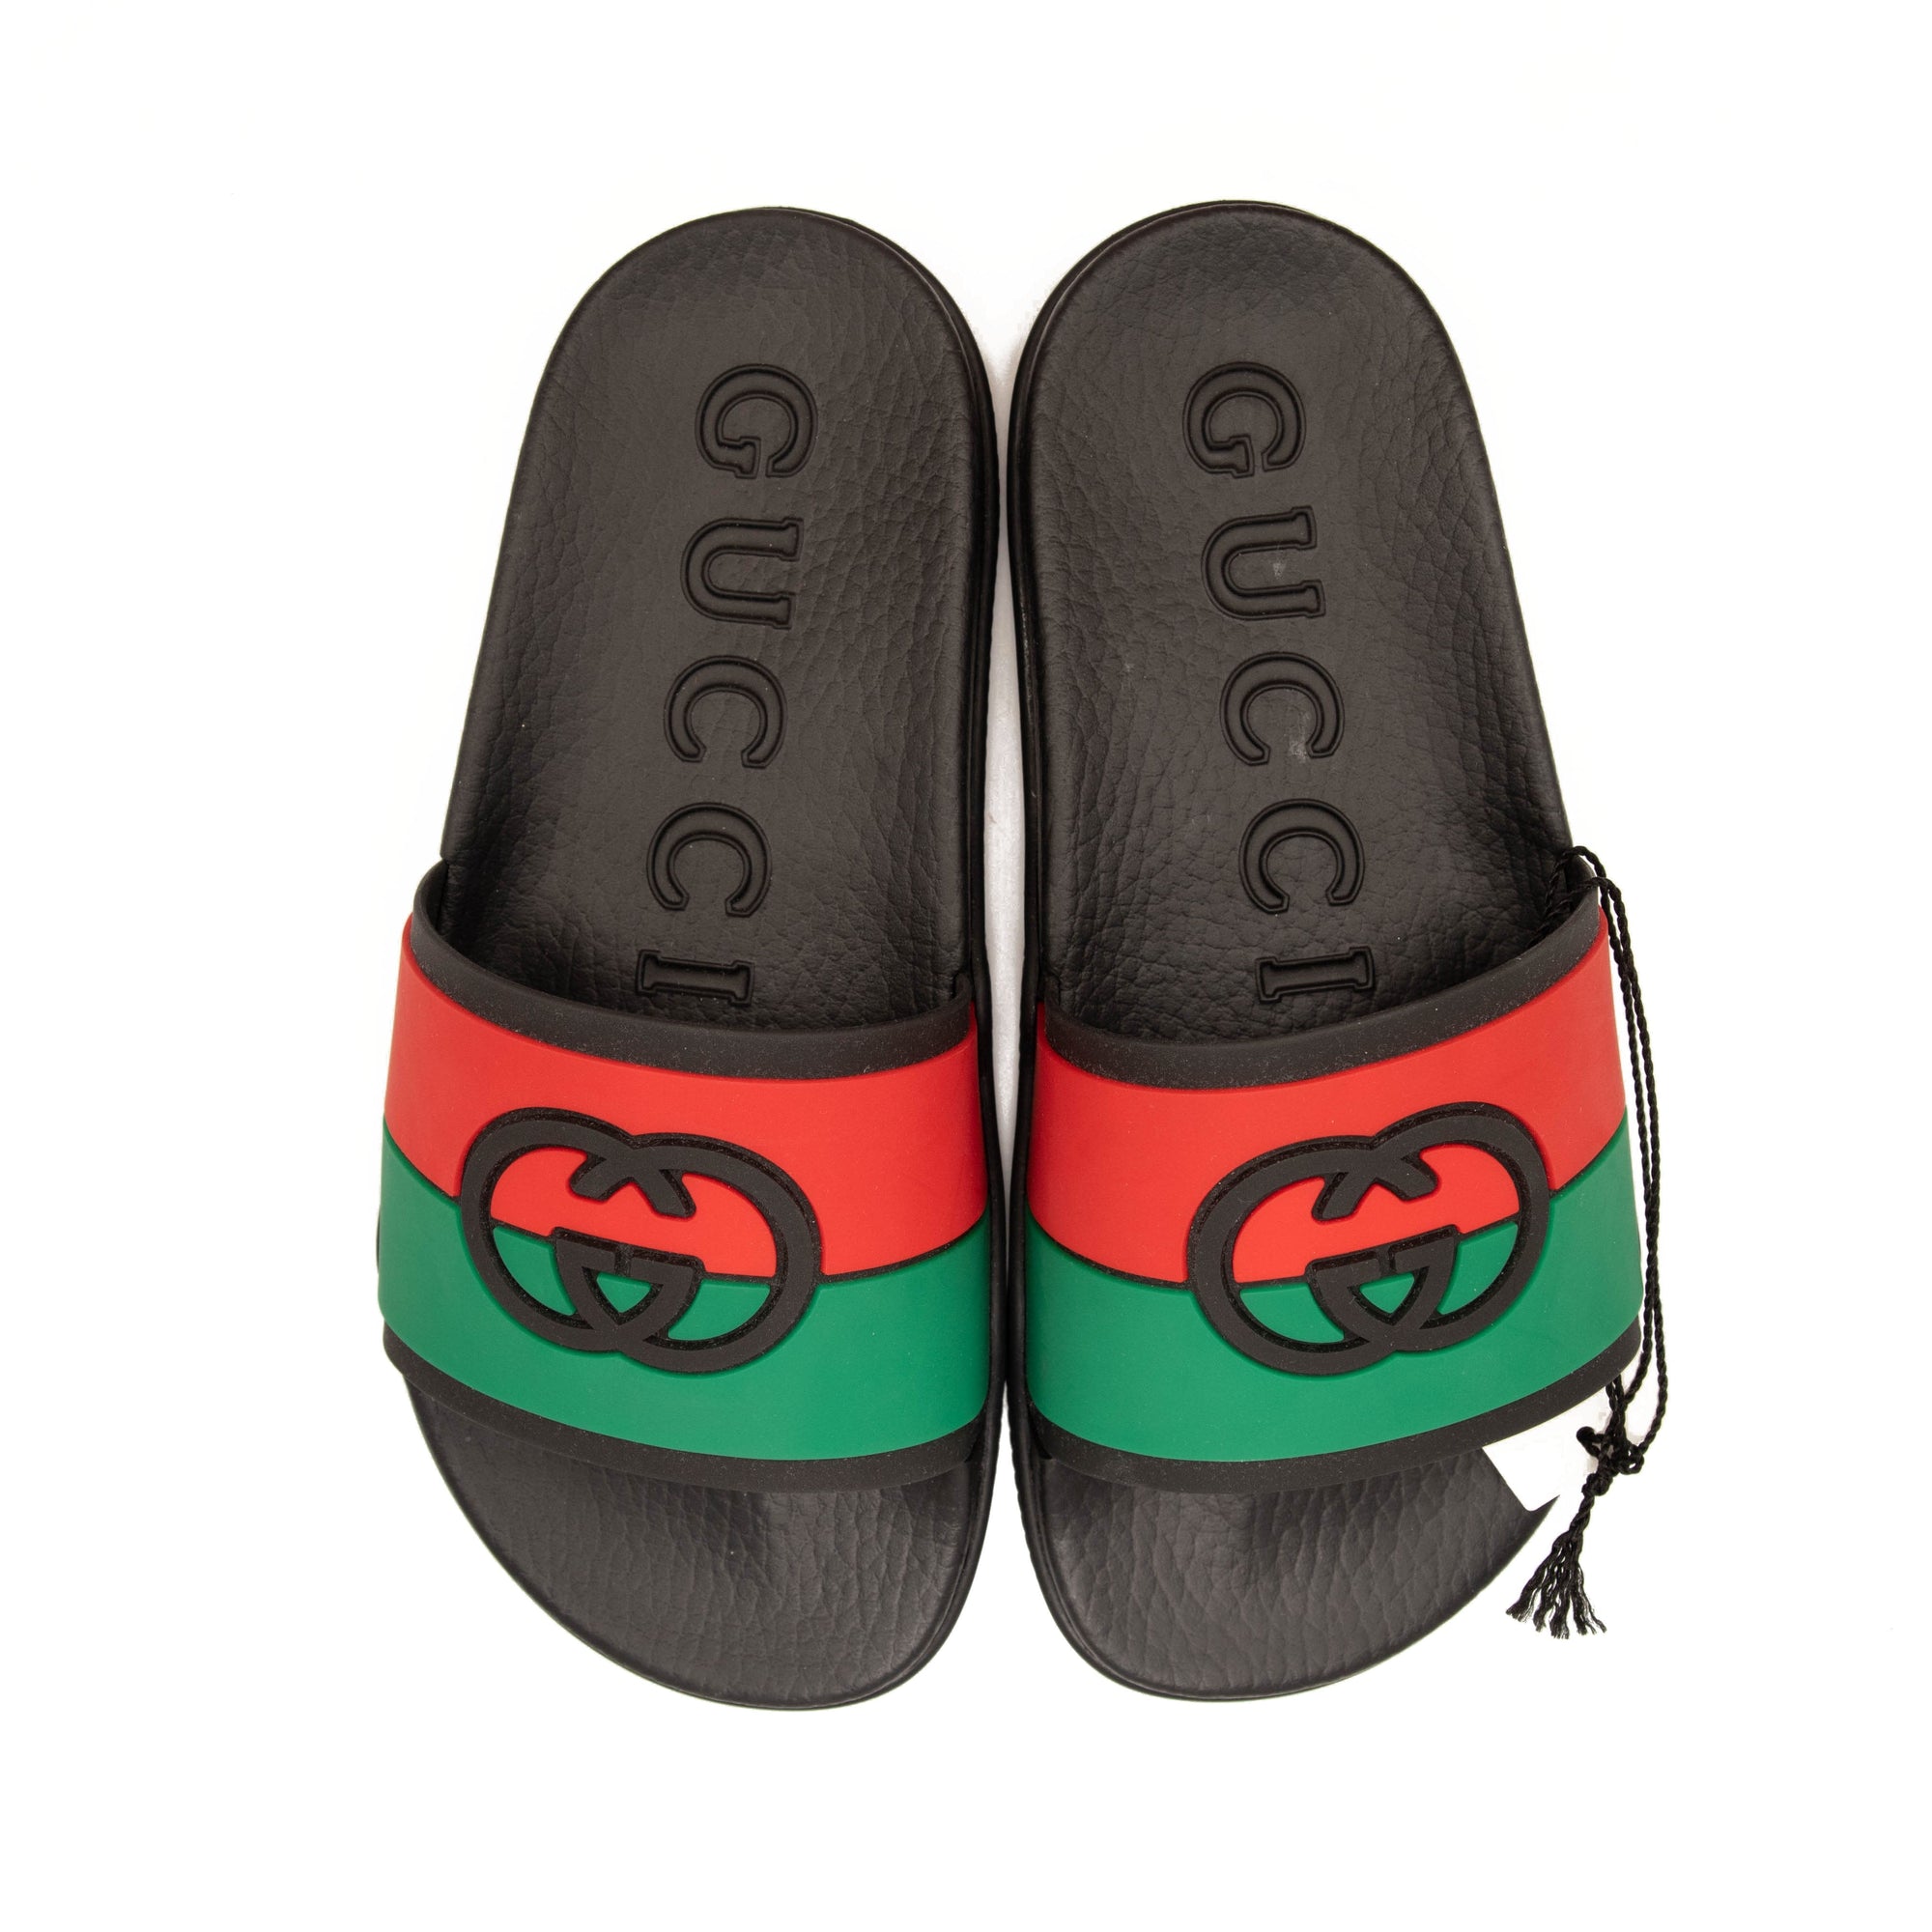 Gucci Sandals - Men - 42 products